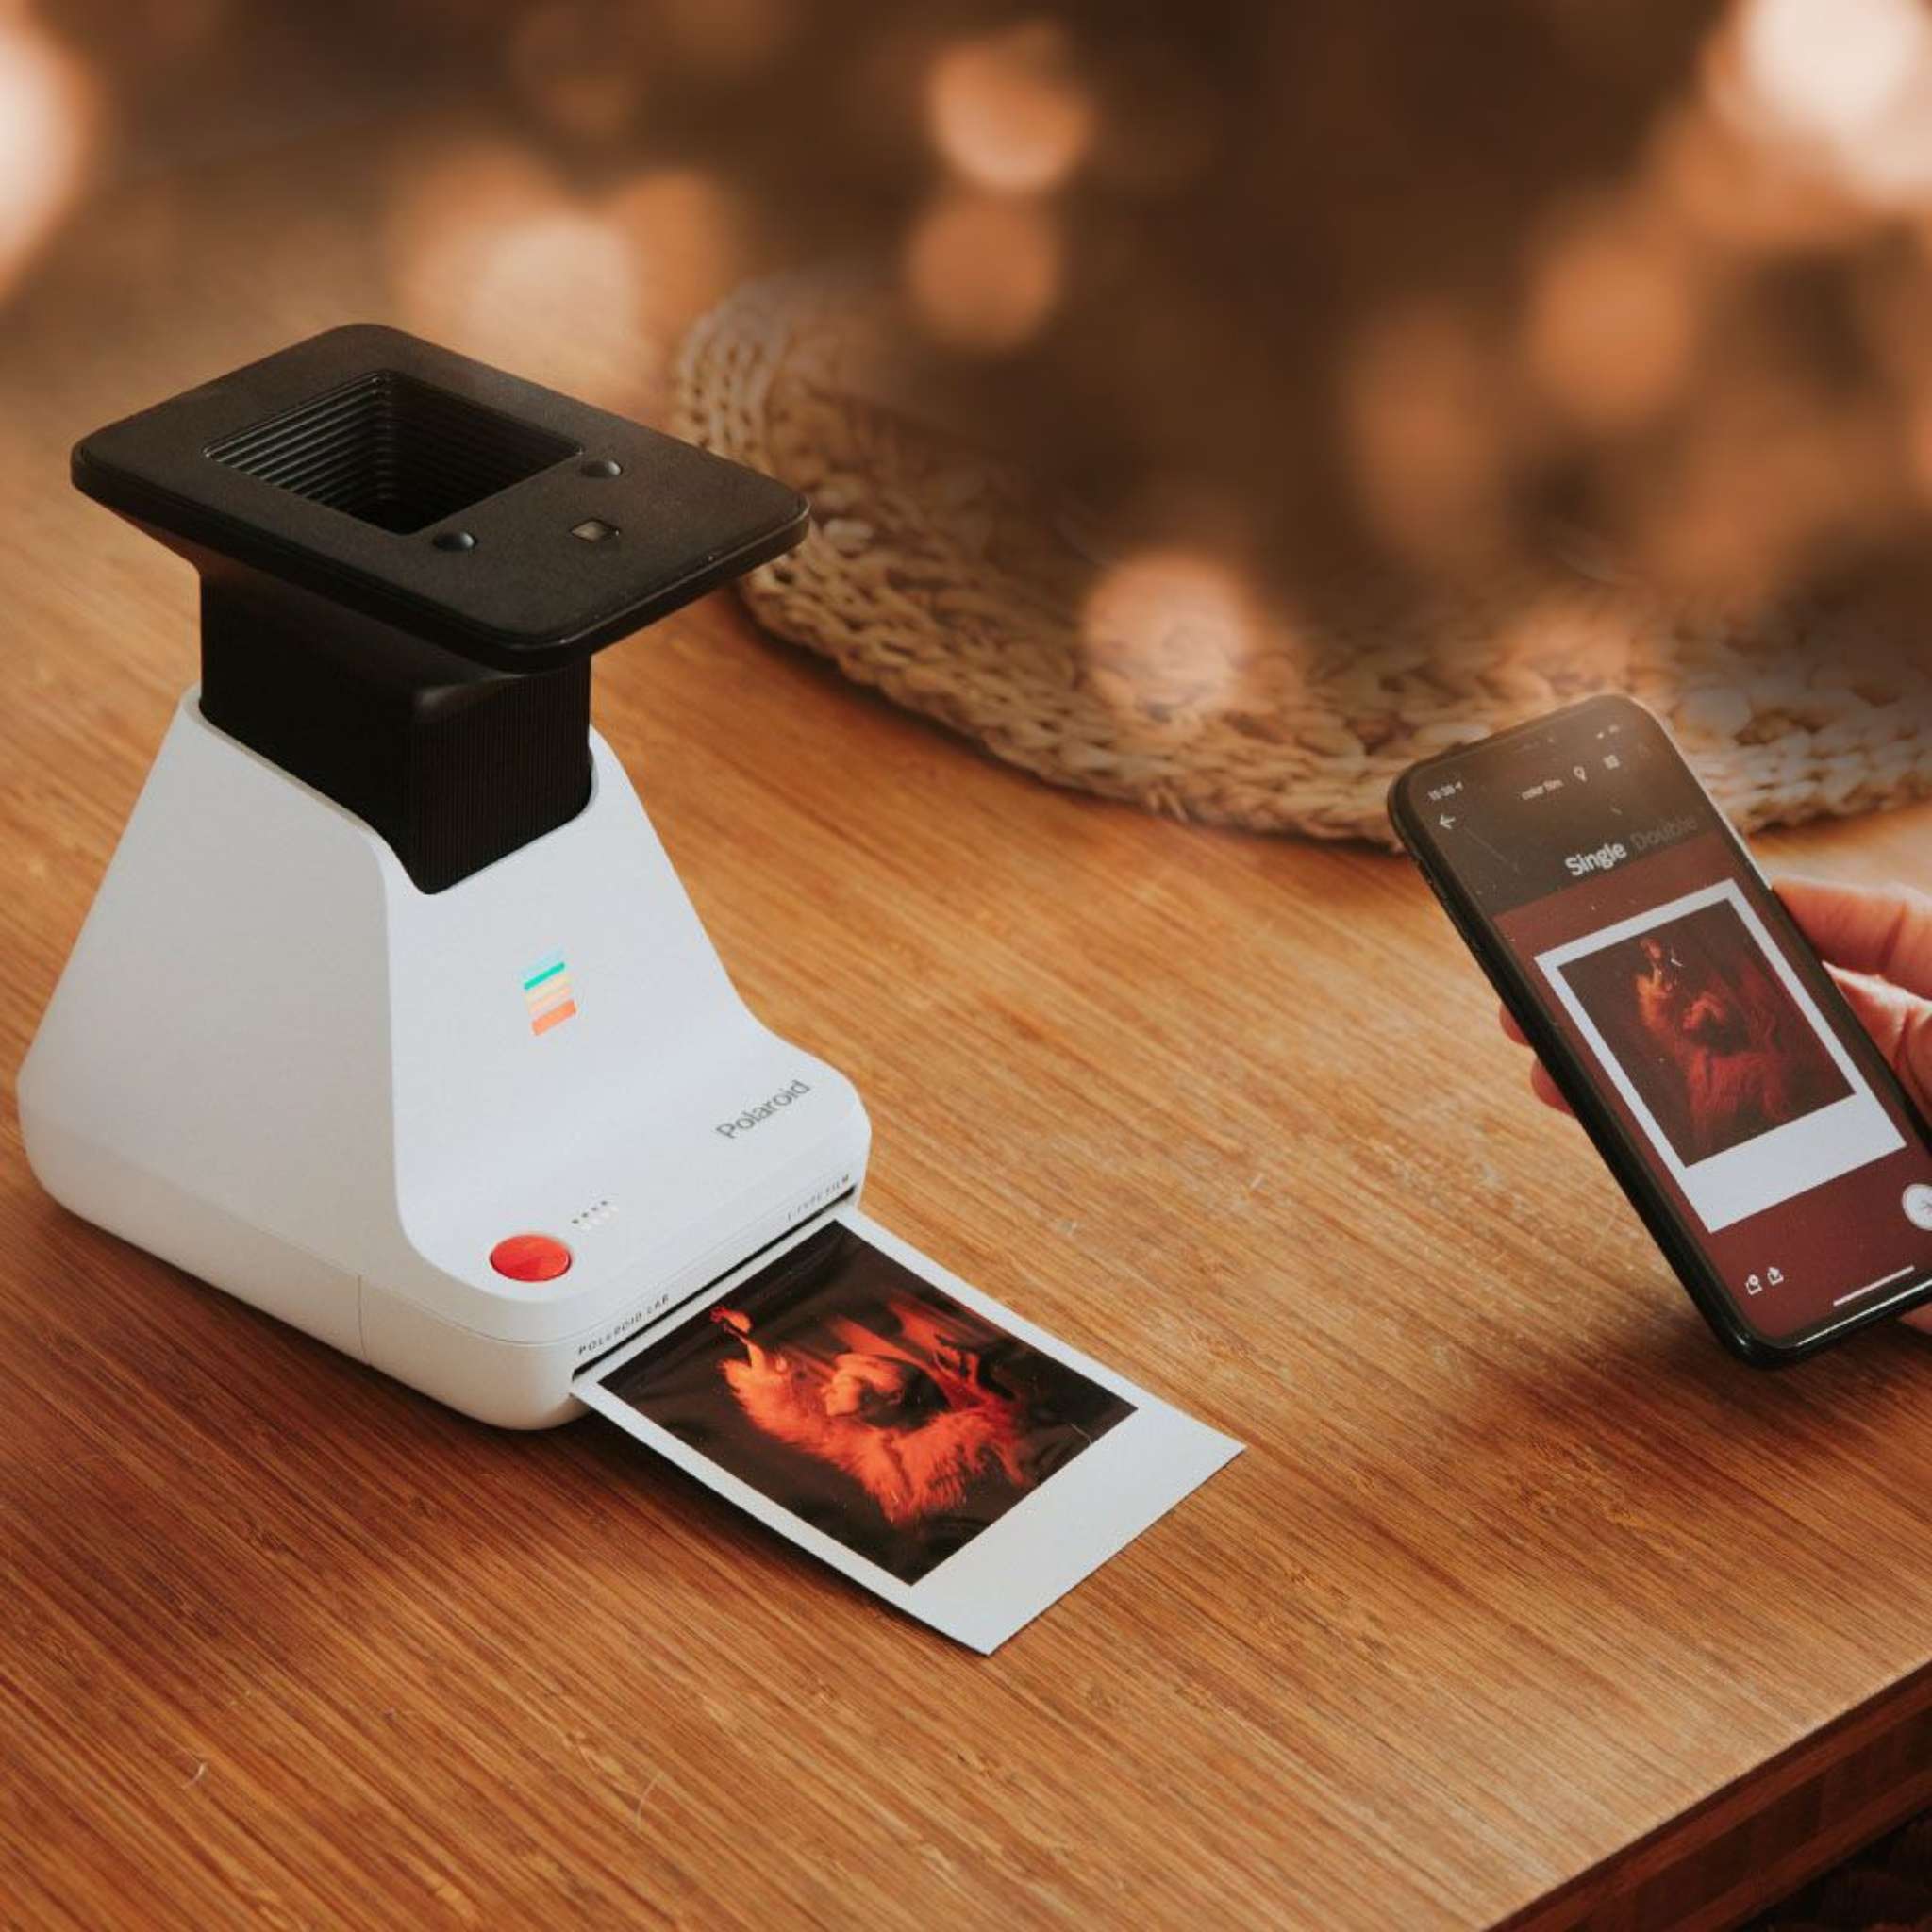 Polaroid Lab turns your phone photos into instant print masterpieces